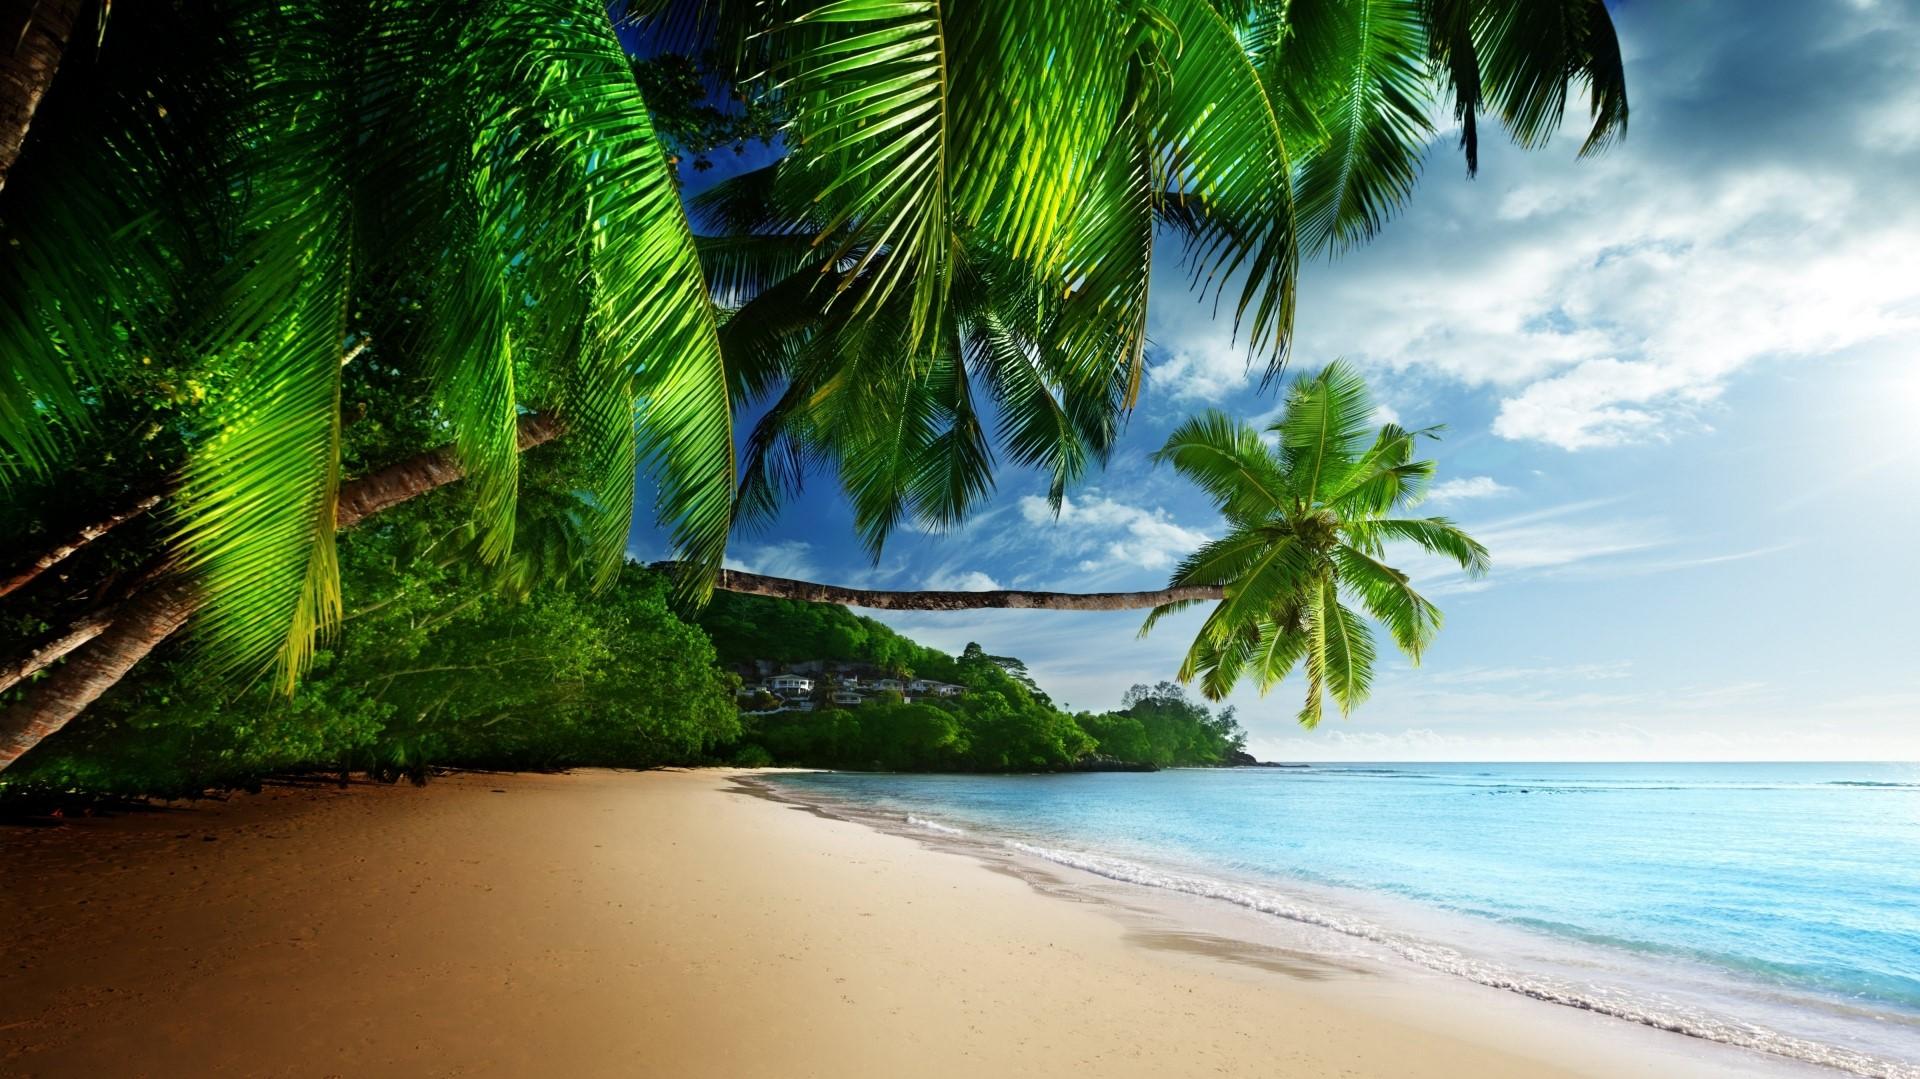 HD Tropical Beach Paradise Rare Gallery Wallpaper